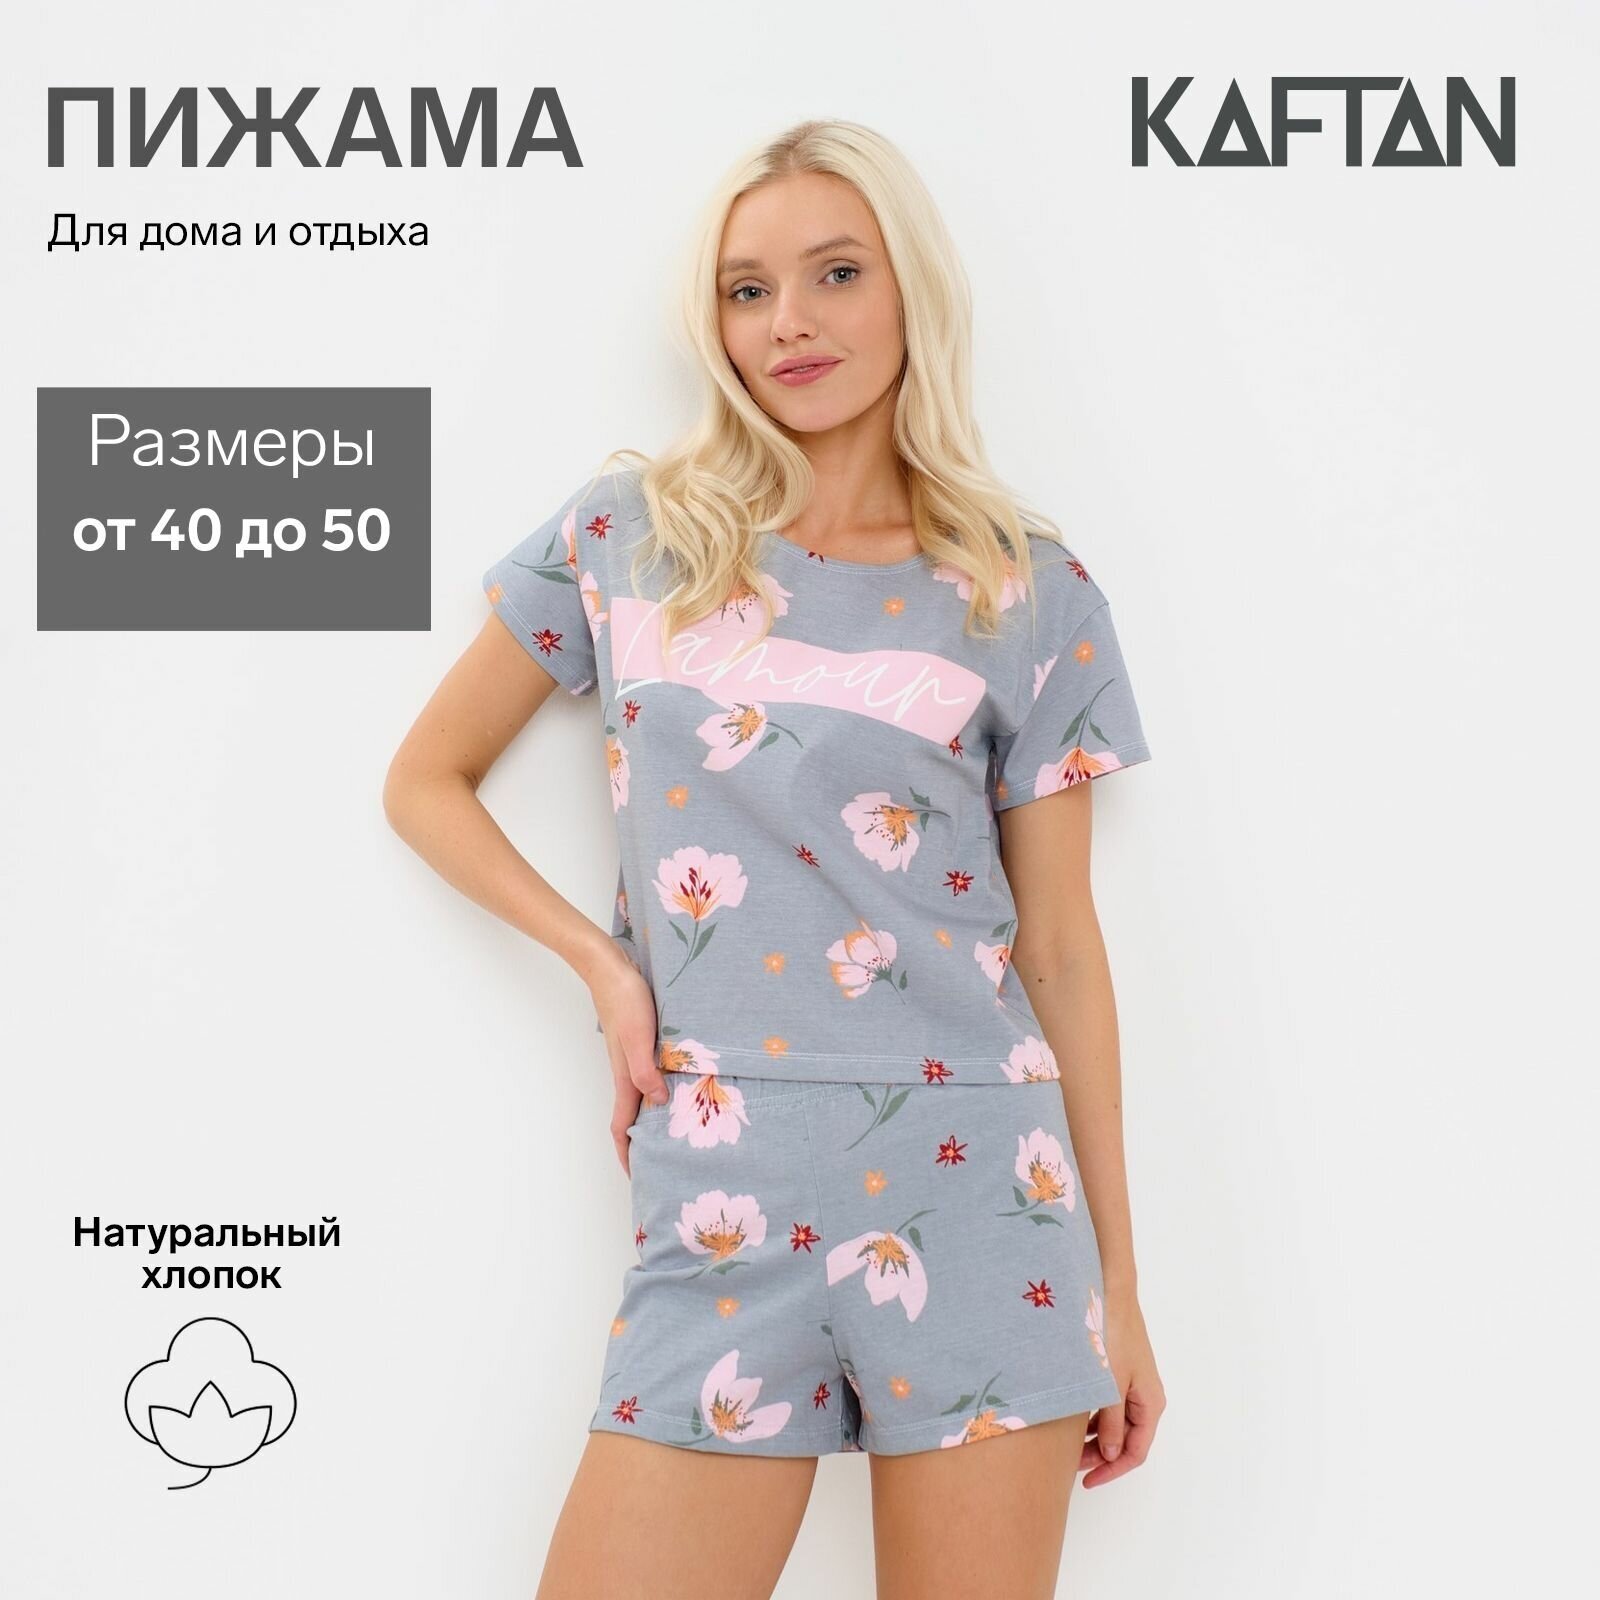 Пижама Kaftan, шорты, футболка, короткий рукав, размер 48-50, серый